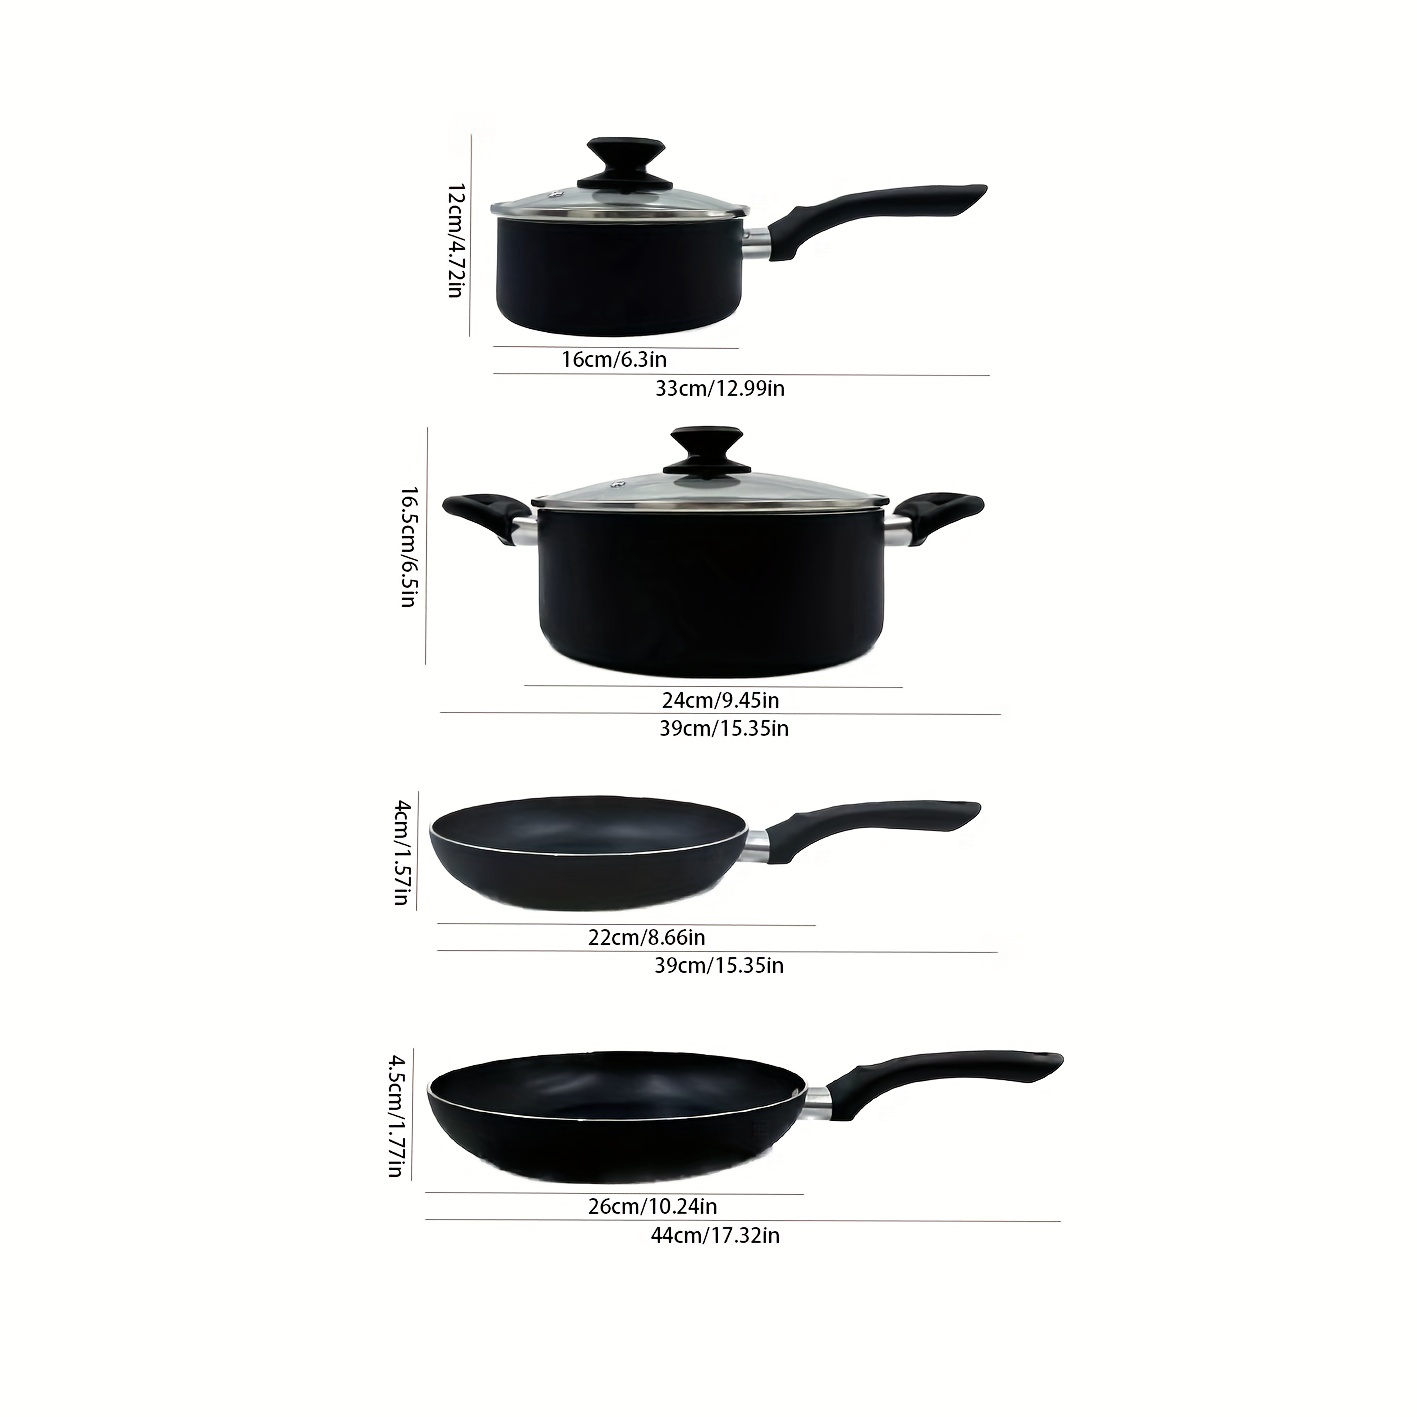 STOCK POT WITH LID, BLACK - 24CM, Healthy Ceramic Nonstick Cookware